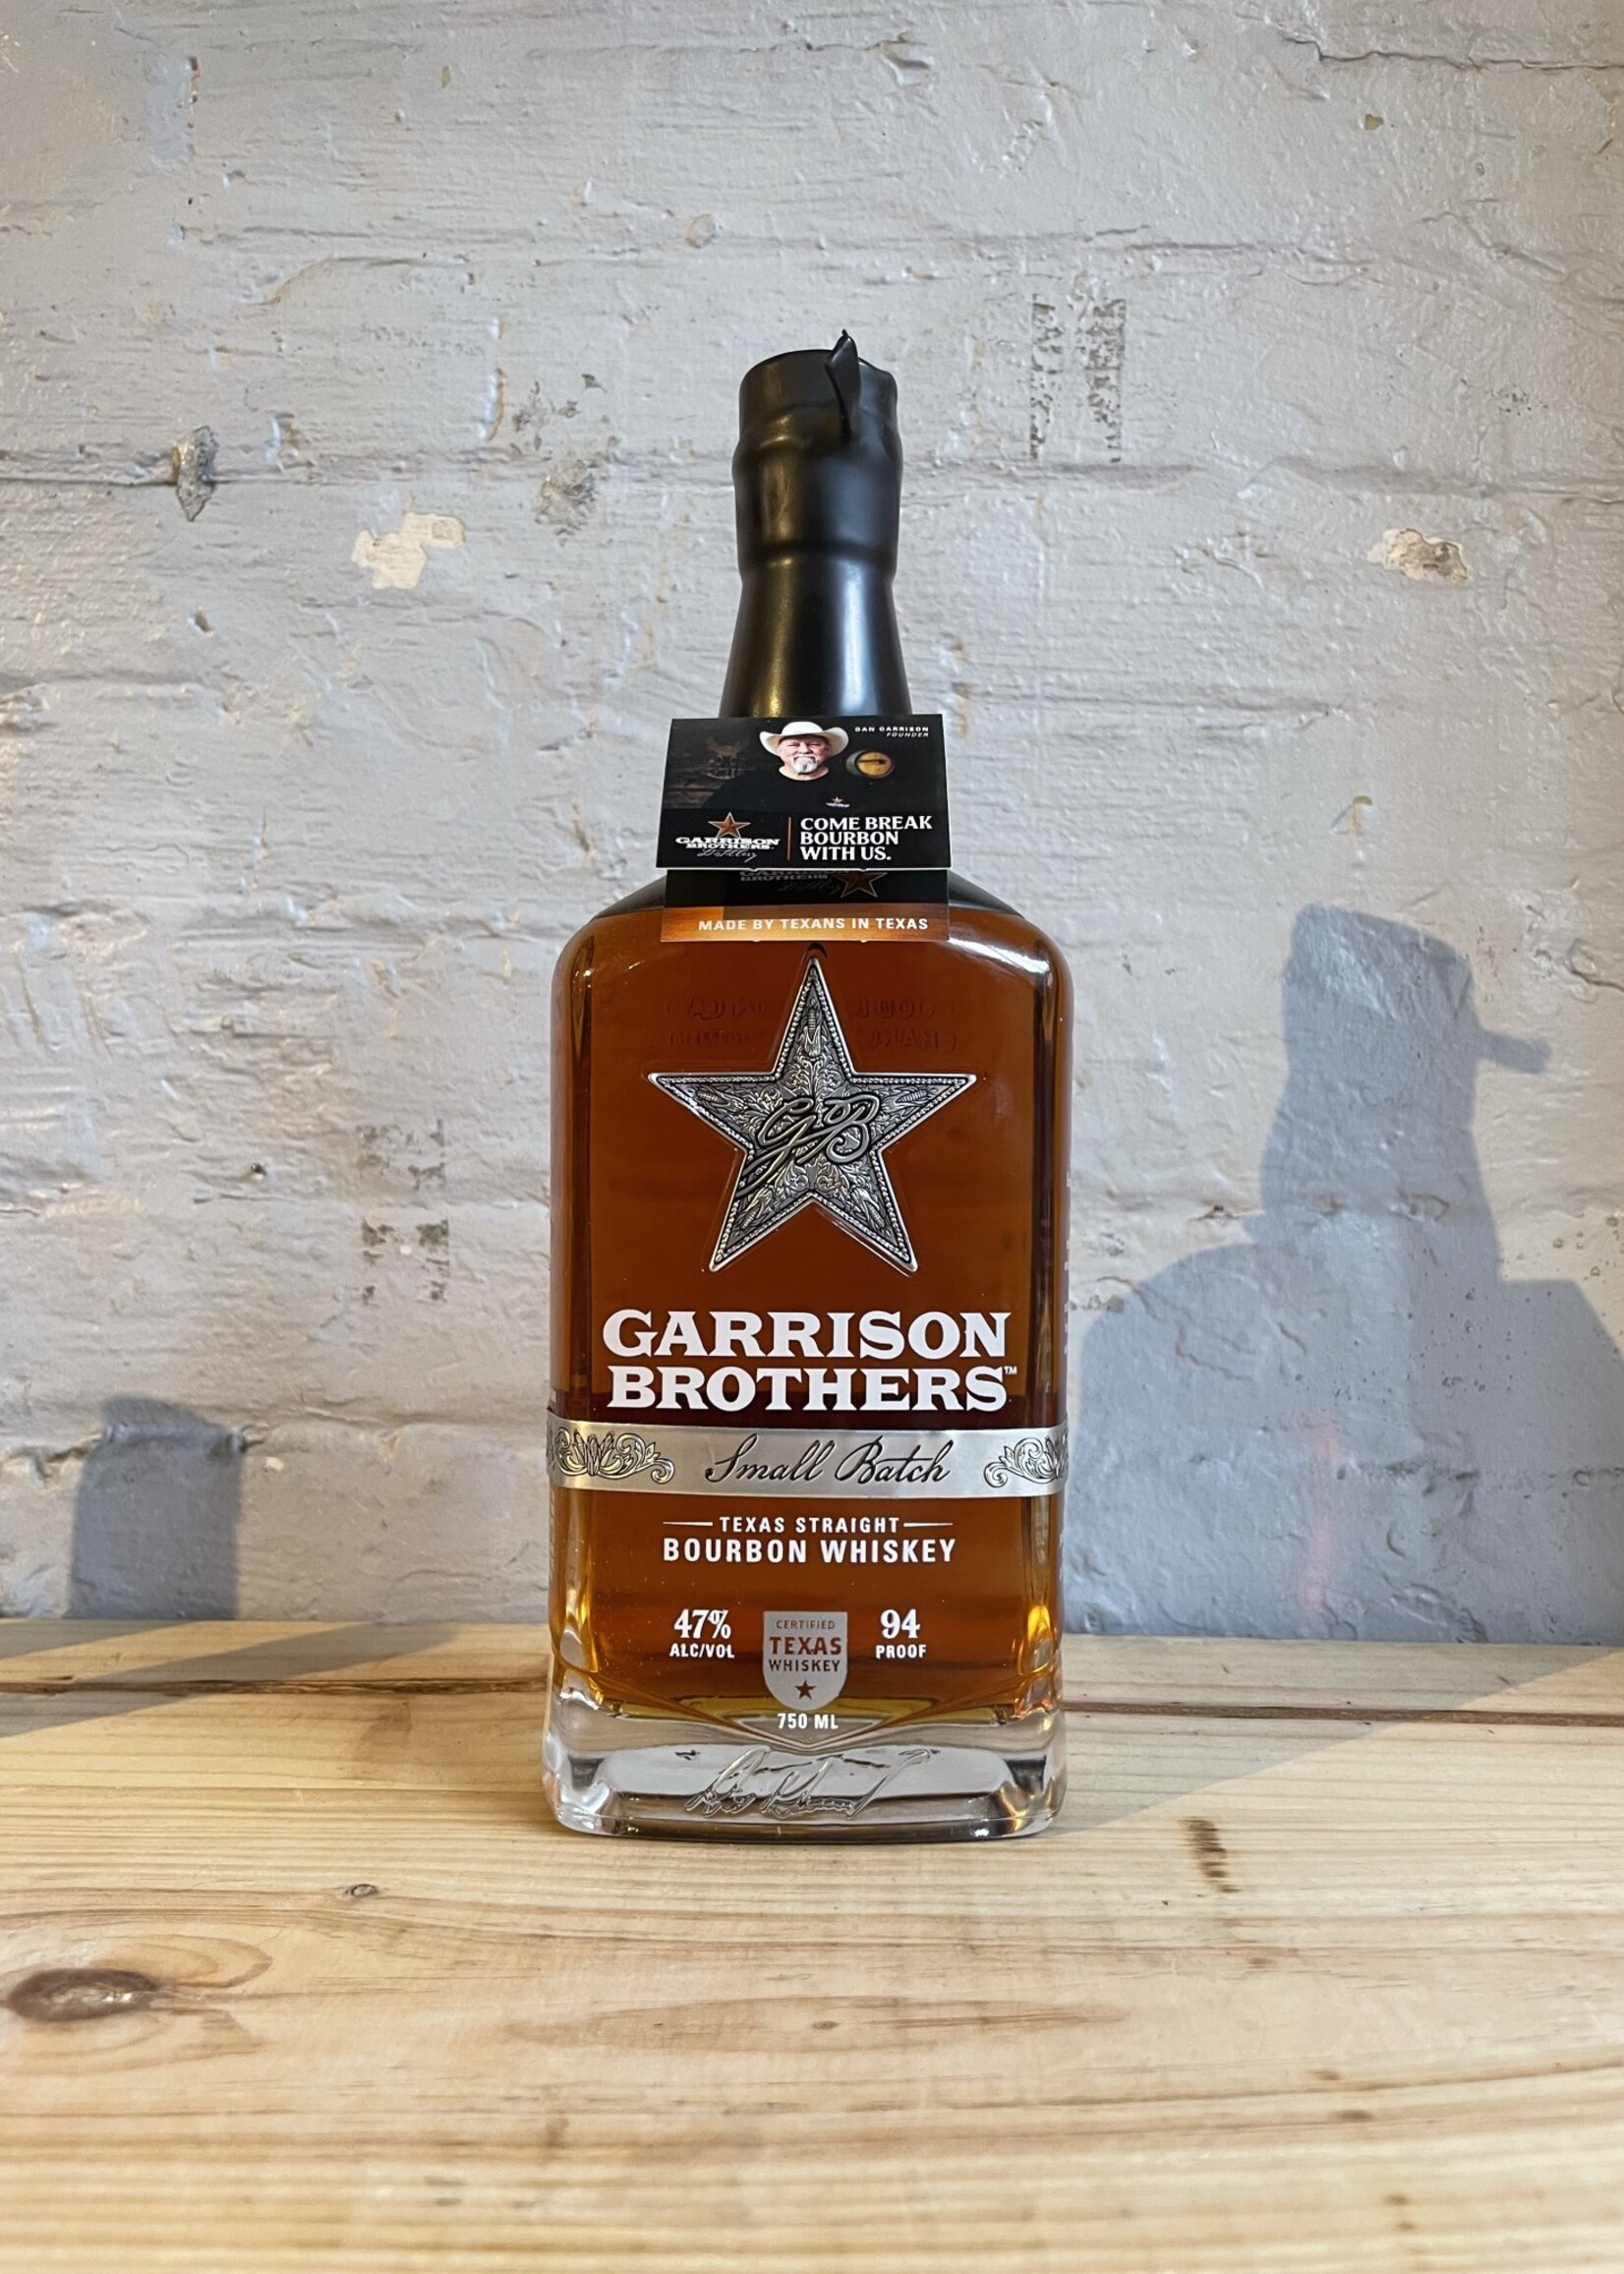 Garrison Brothers SMall Batch Straight Bourbon Whiskey - Hye, Texas (750ml)